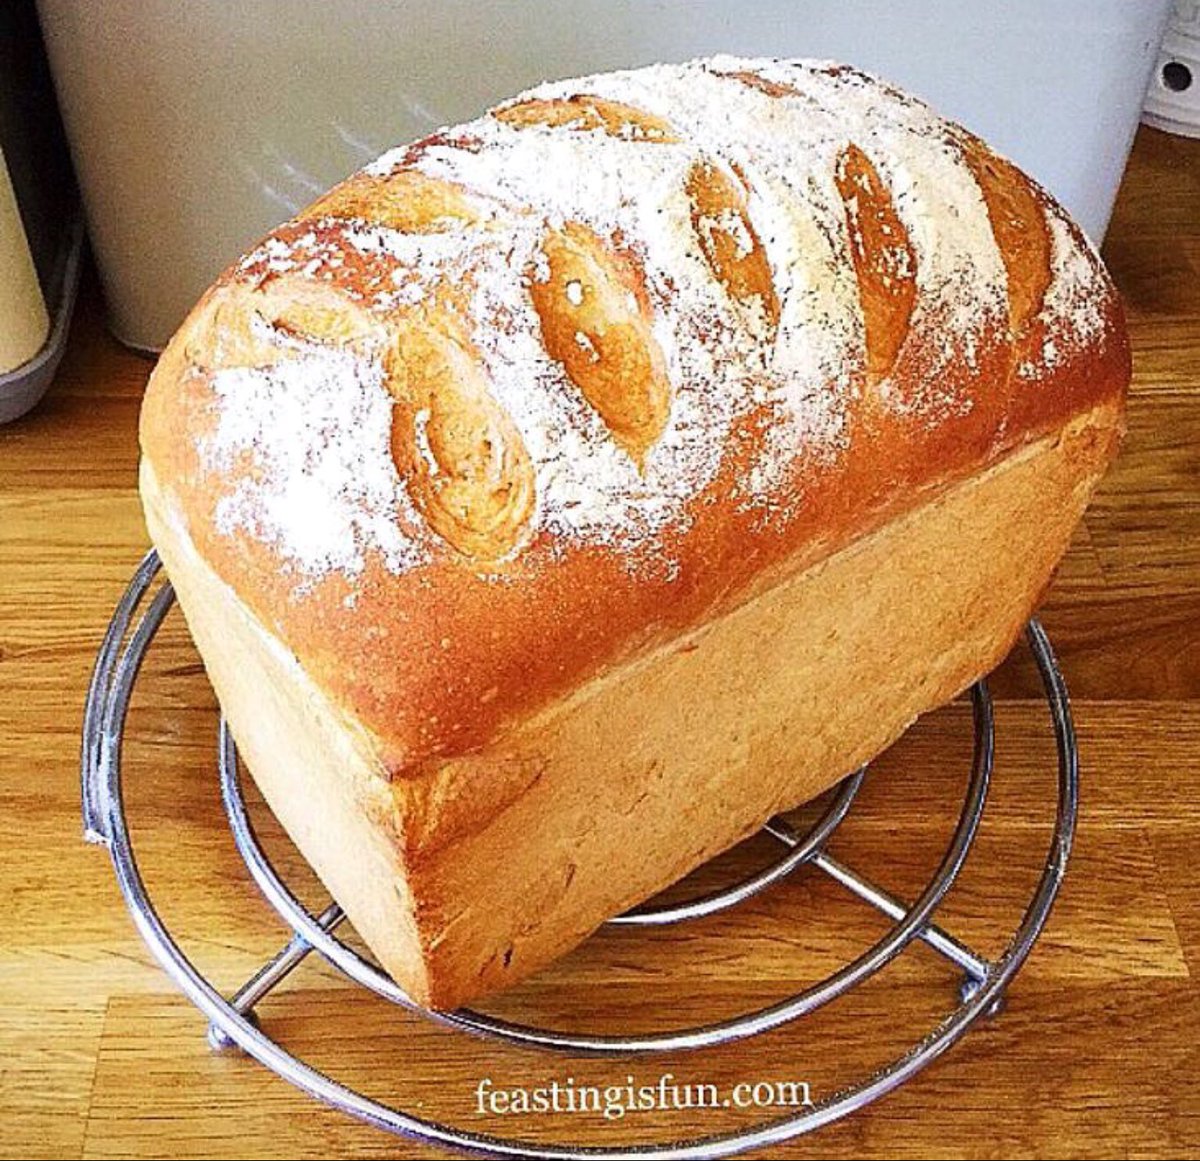 Farmhouse White Loaf - the most popular bread recipe on my blog for a reason! Easy to make & bake & tastes delicious 🥰
Recipe - feastingisfun.com/farmhouse-whit…
#thursdayvibes #realbread #RecipeOfTheDay #baking